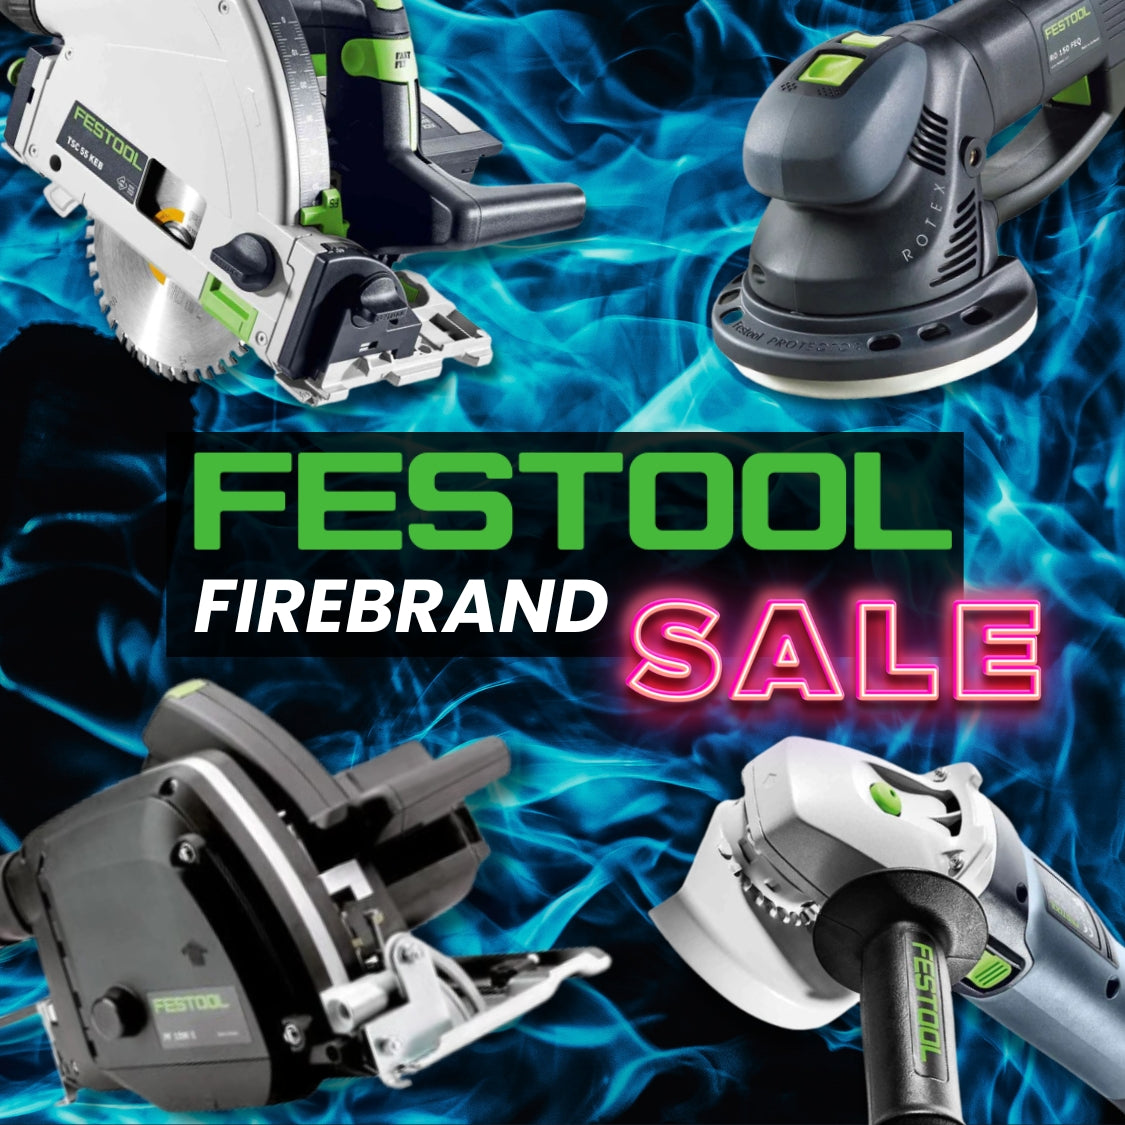 Festool Firebrand Sale